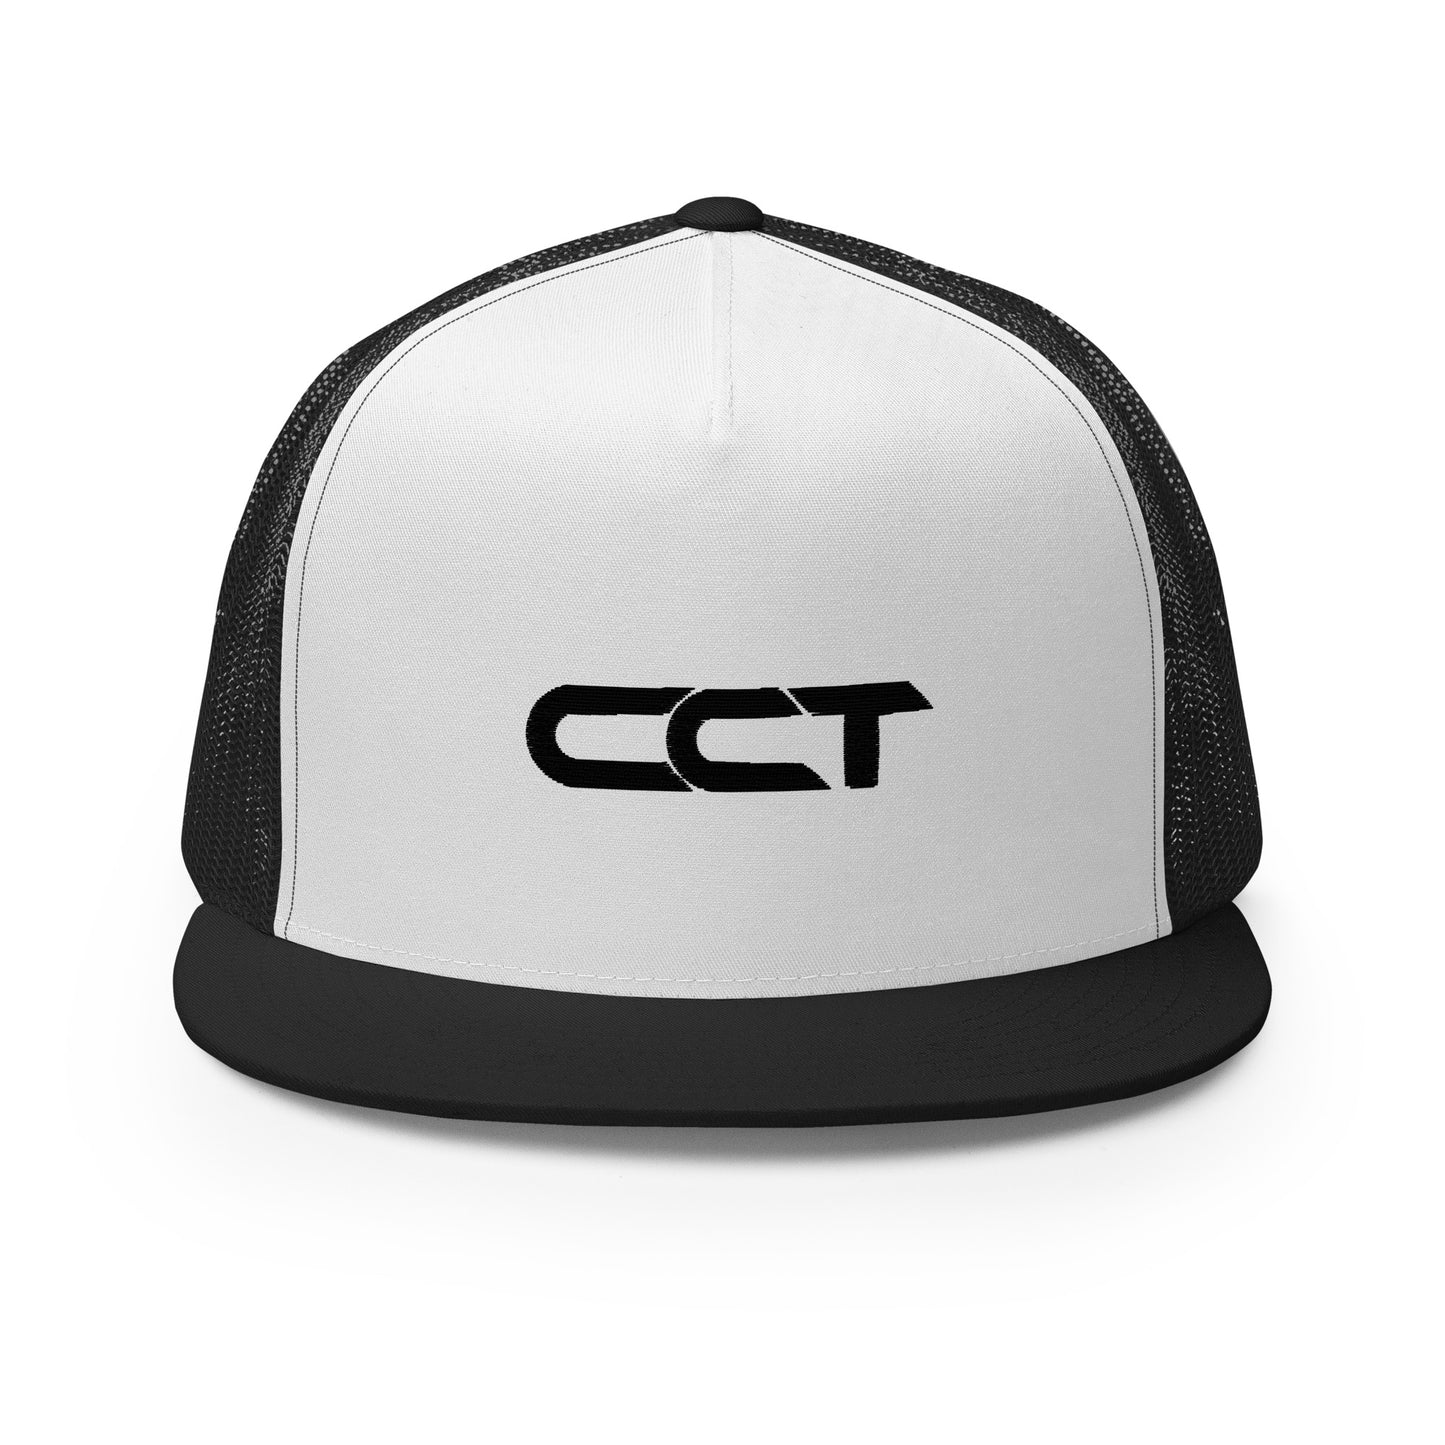 Christopher Chapman-Taylor "CCT" Trucker Cap